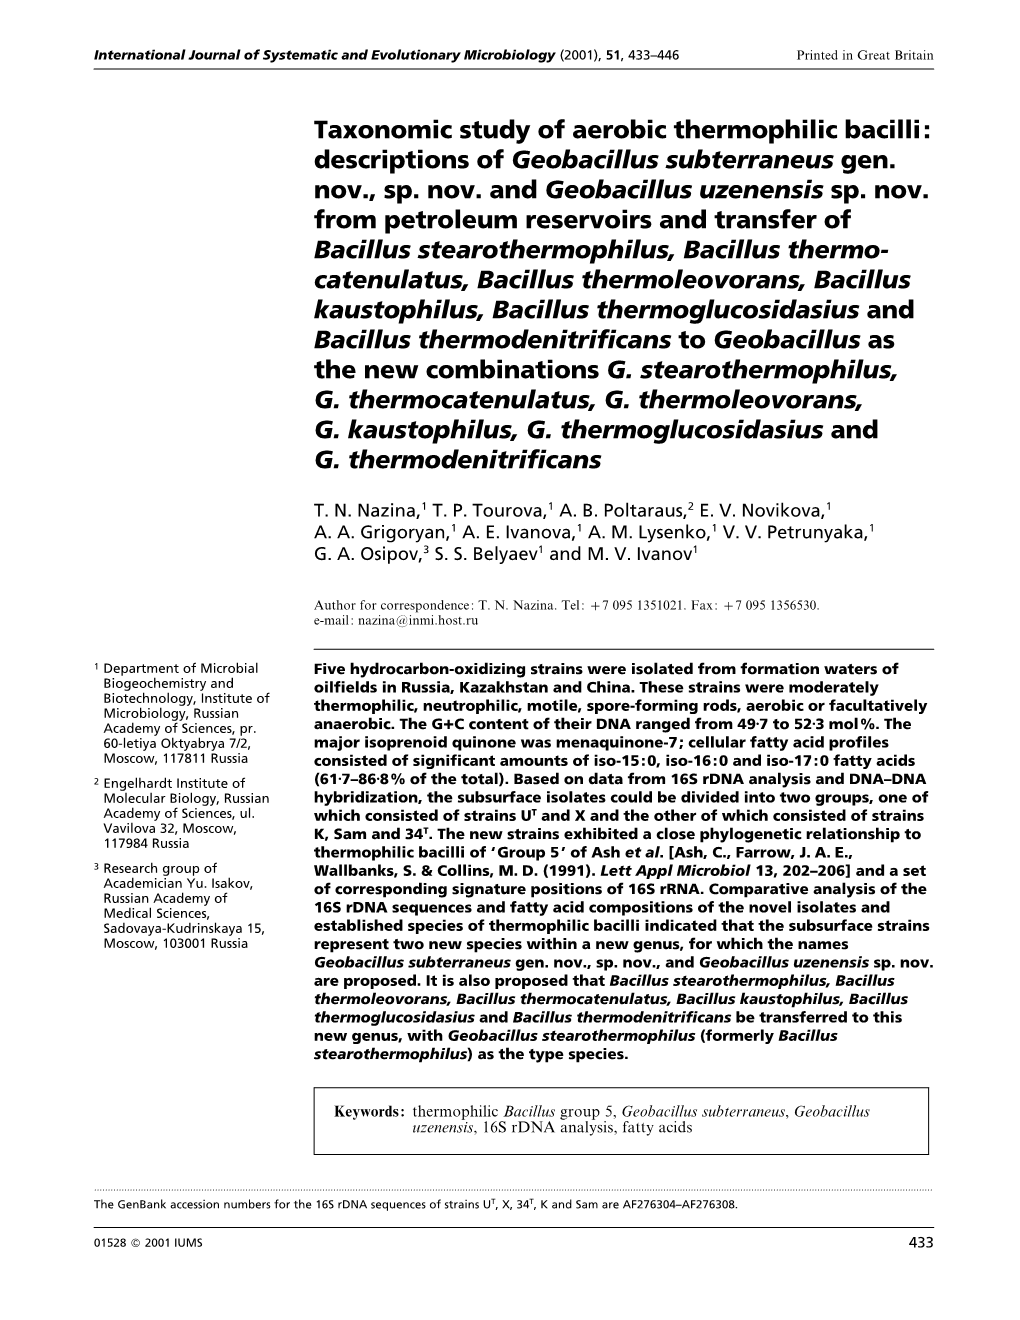 Taxonomic Study of Aerobic Thermophilic Bacilli: Descriptions of Geobacillus Subterraneus Gen. Nov., Sp. Nov. and Geobacillus Uzenensis Sp